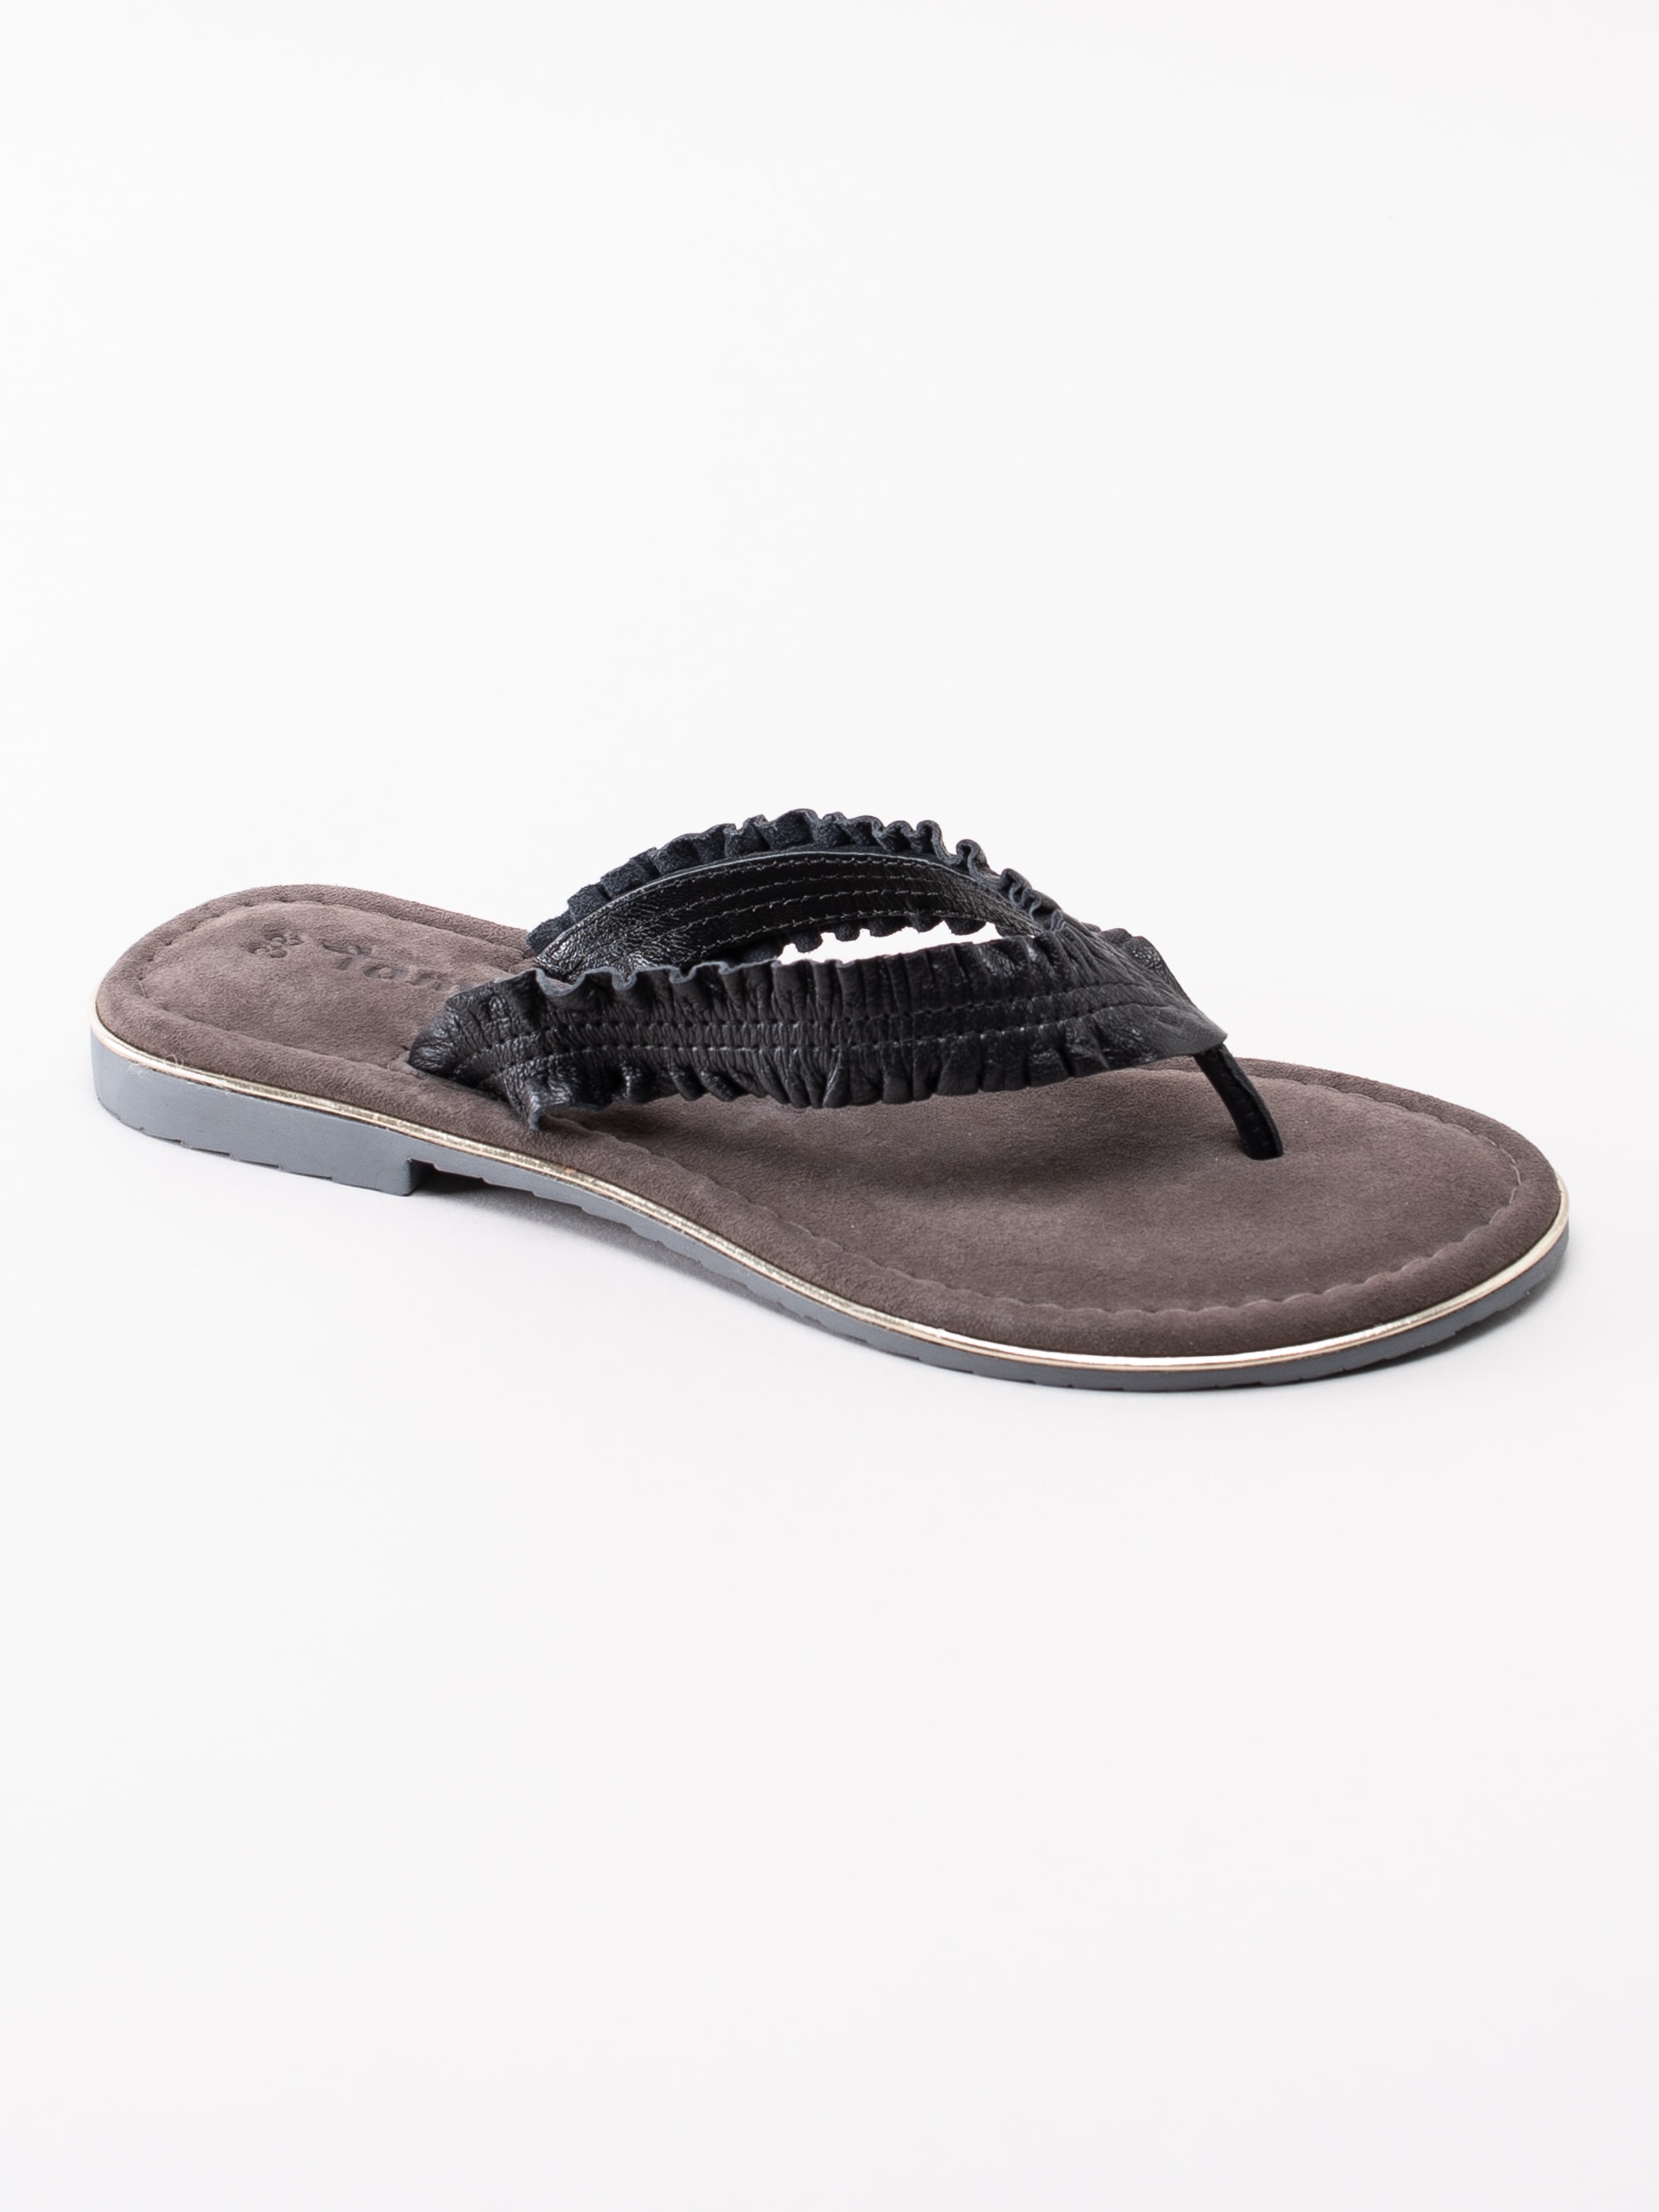 65191080 Tamaris 1-27110-22-001 svarta flip flops sandaler med volang-1